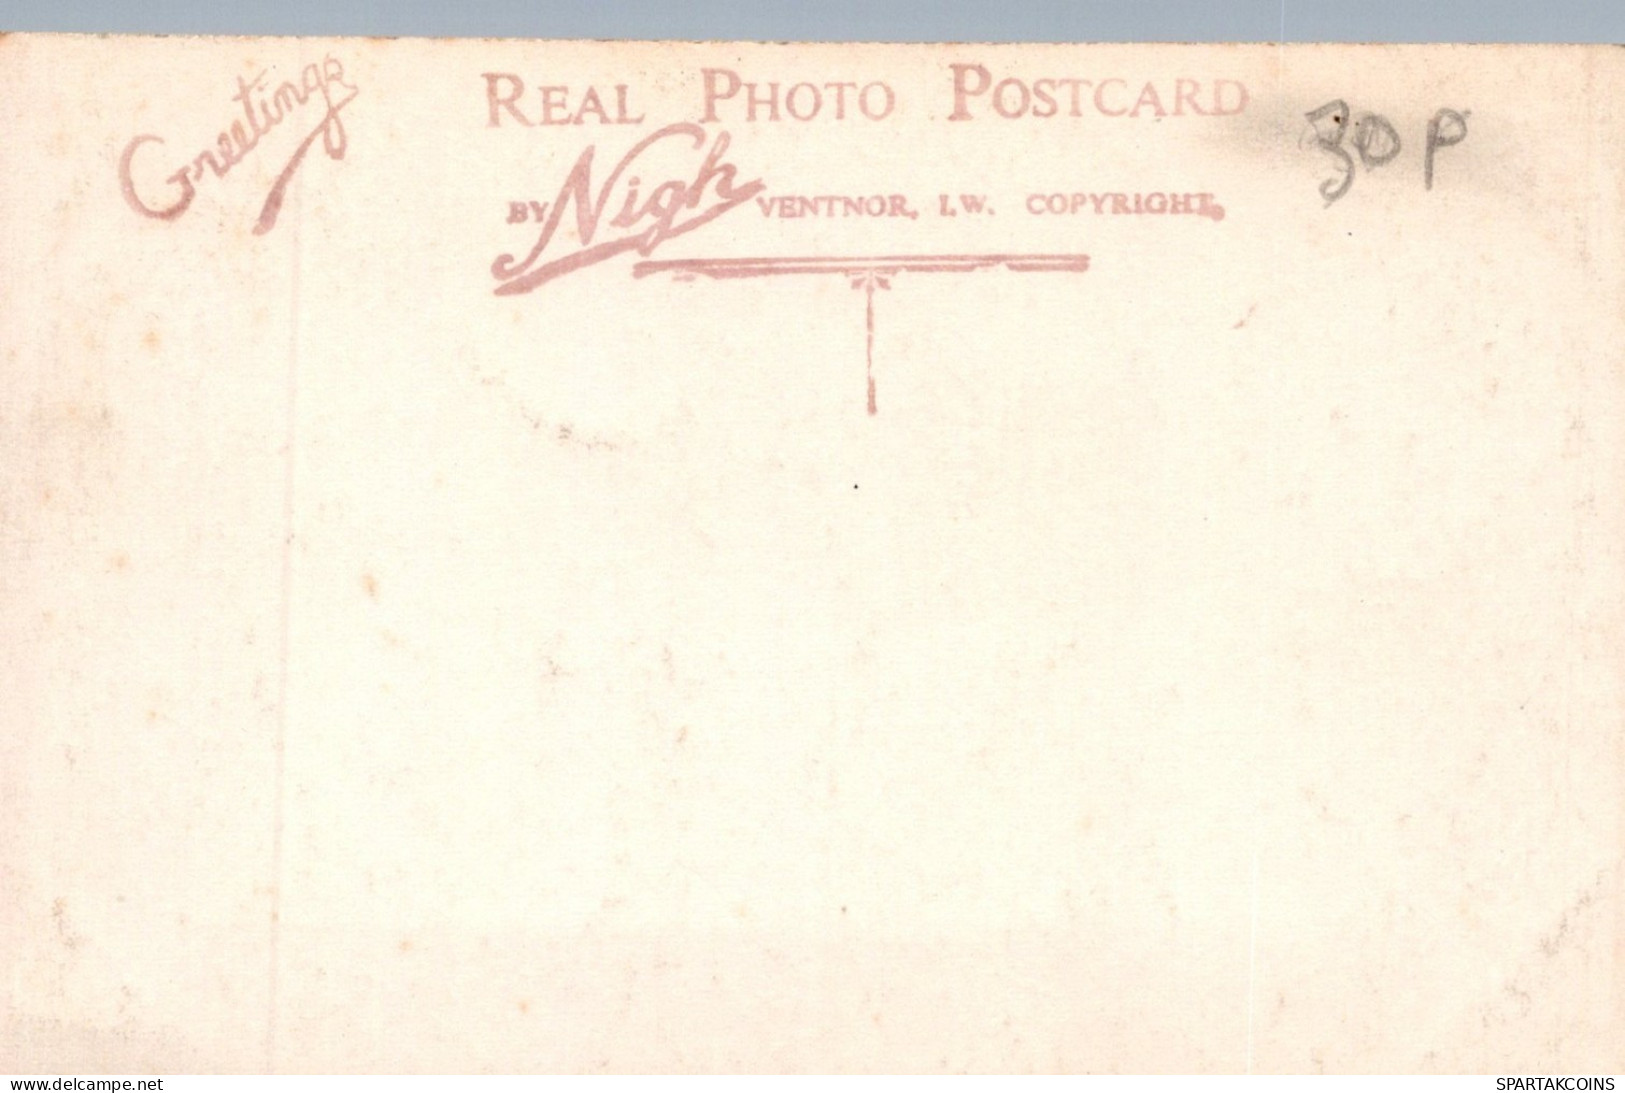 BURRO Animales Vintage Antiguo CPA Tarjeta Postal #PAA042.A - Anes